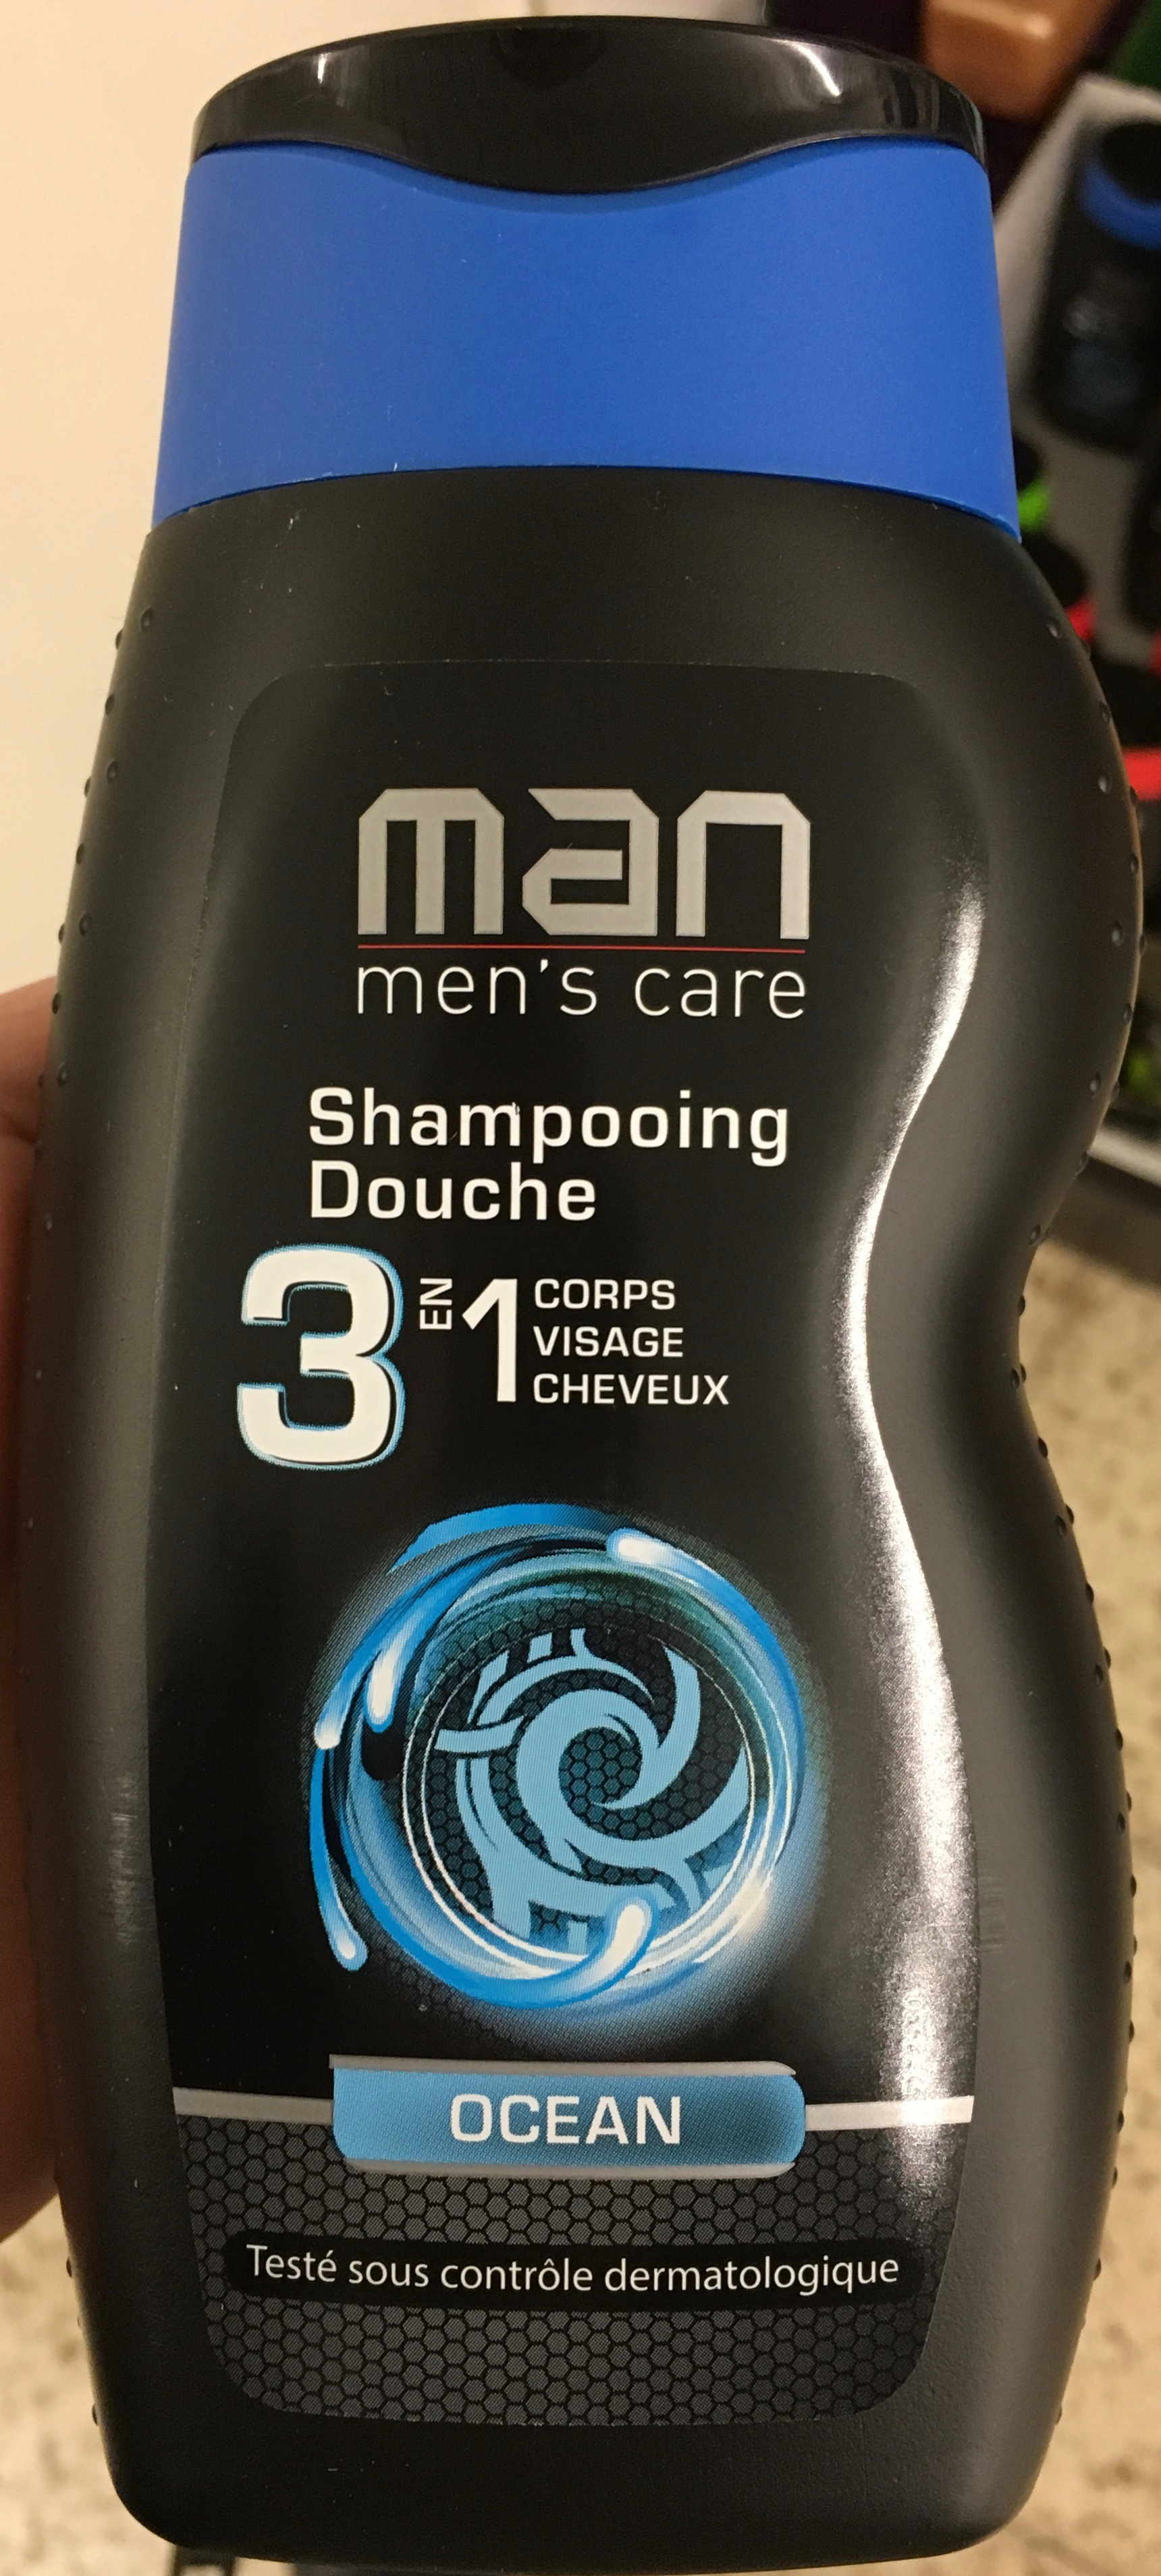 Man men's care Shampooing Douche 3 en 1 Ocean - Product - fr